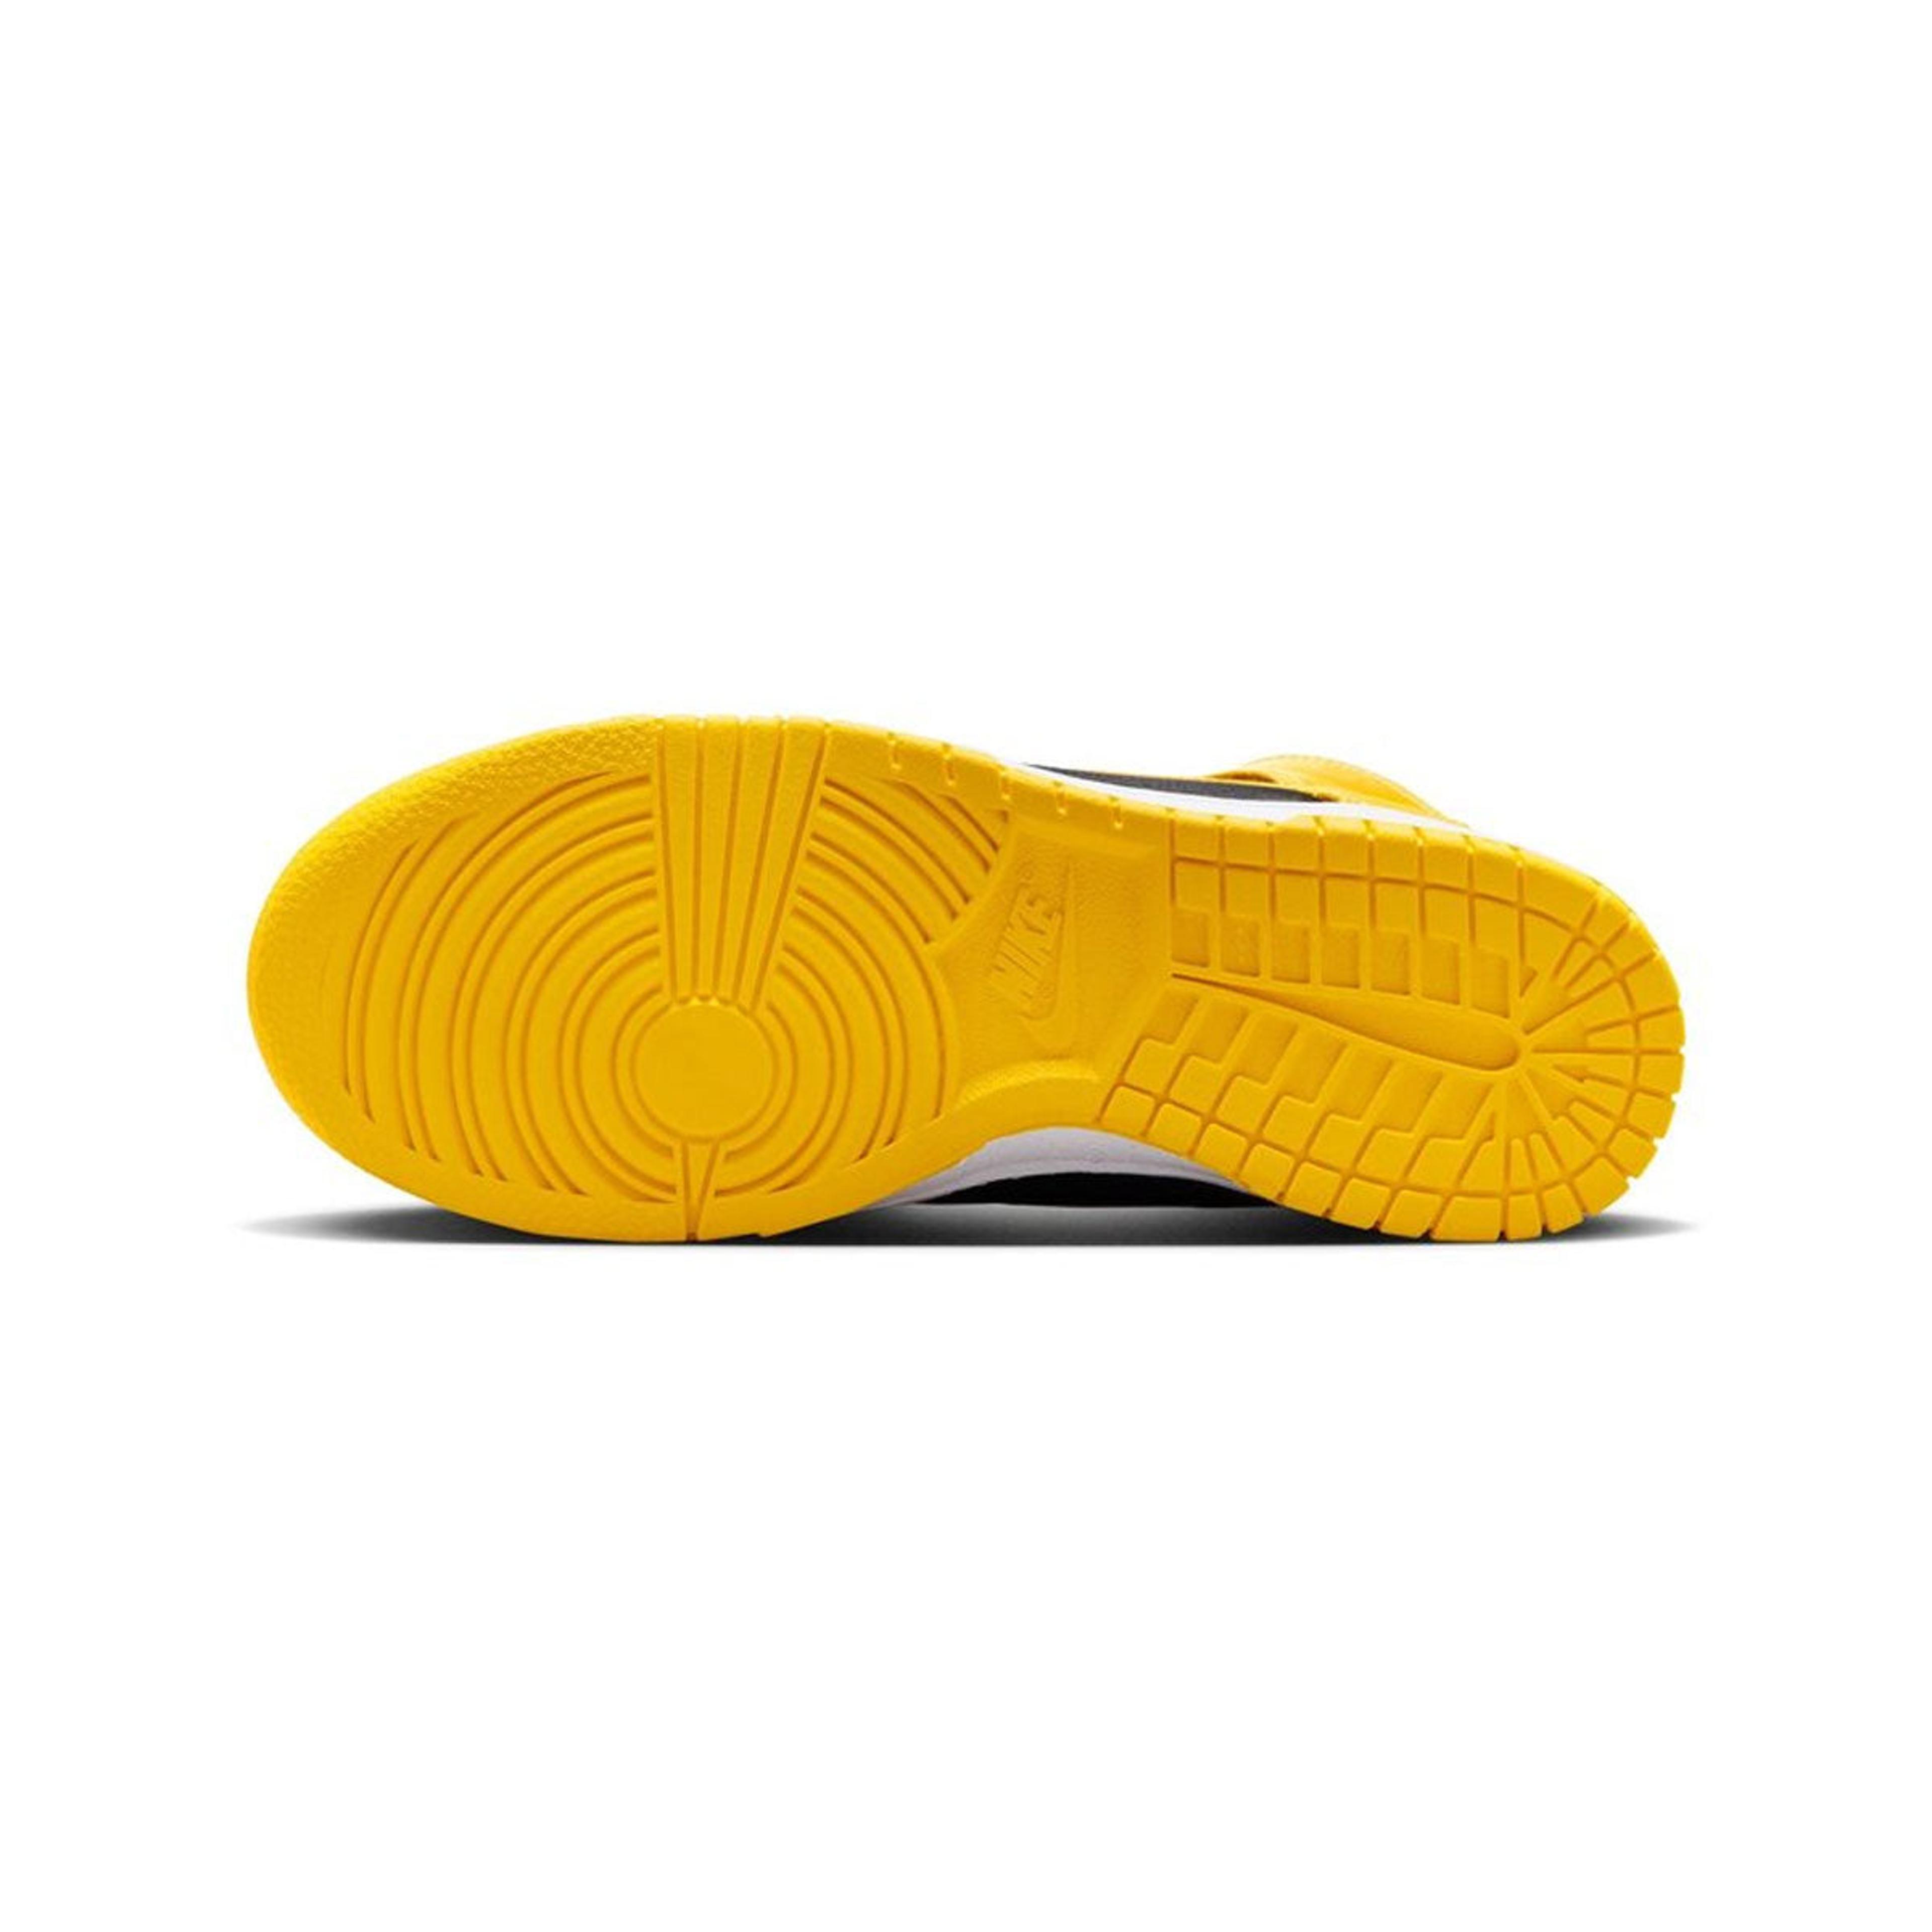 Alternate View 1 of Nike Wmns Dunk High “Satin Goldenrod”